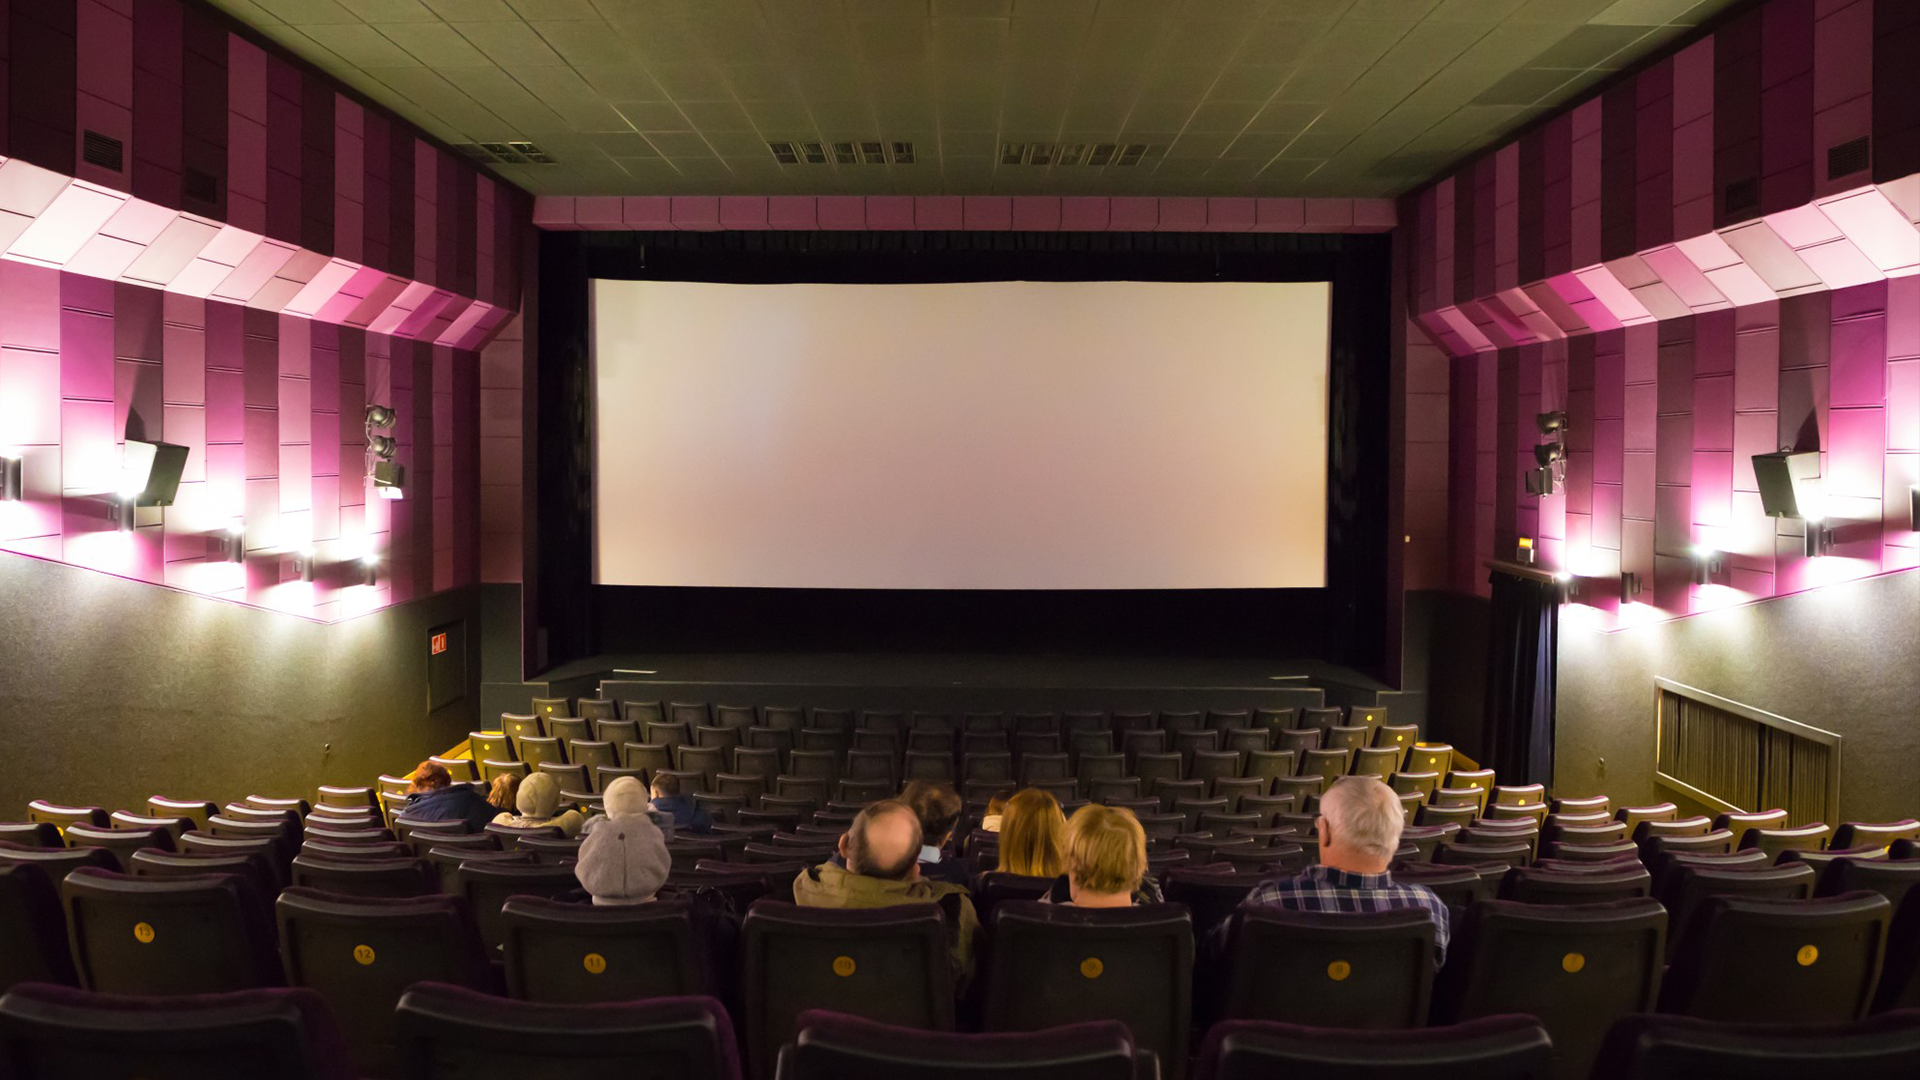 Cinema in Festa: in June tickets on offer at €3.50